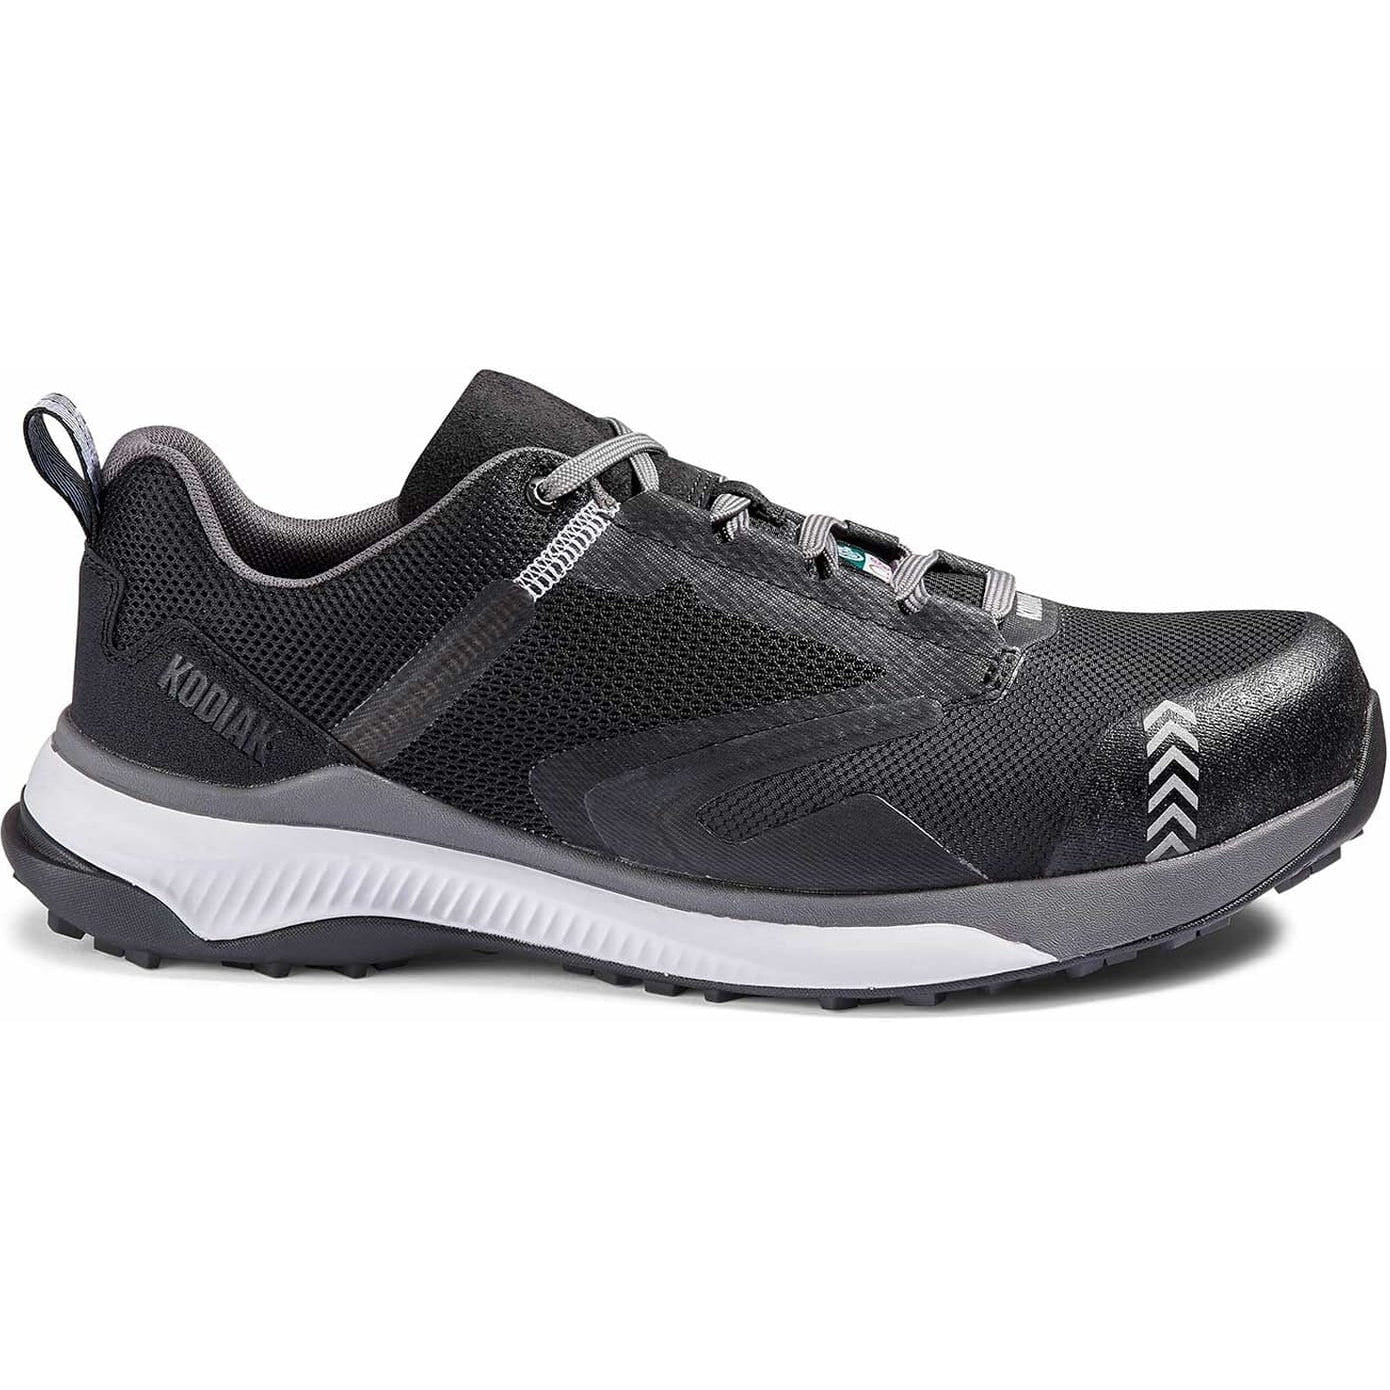 Kodiak Men's Quicktrail Low CT Athletic Safety Work Shoe -Black- 4TGYBK 7 / Wide / Black - Overlook Boots